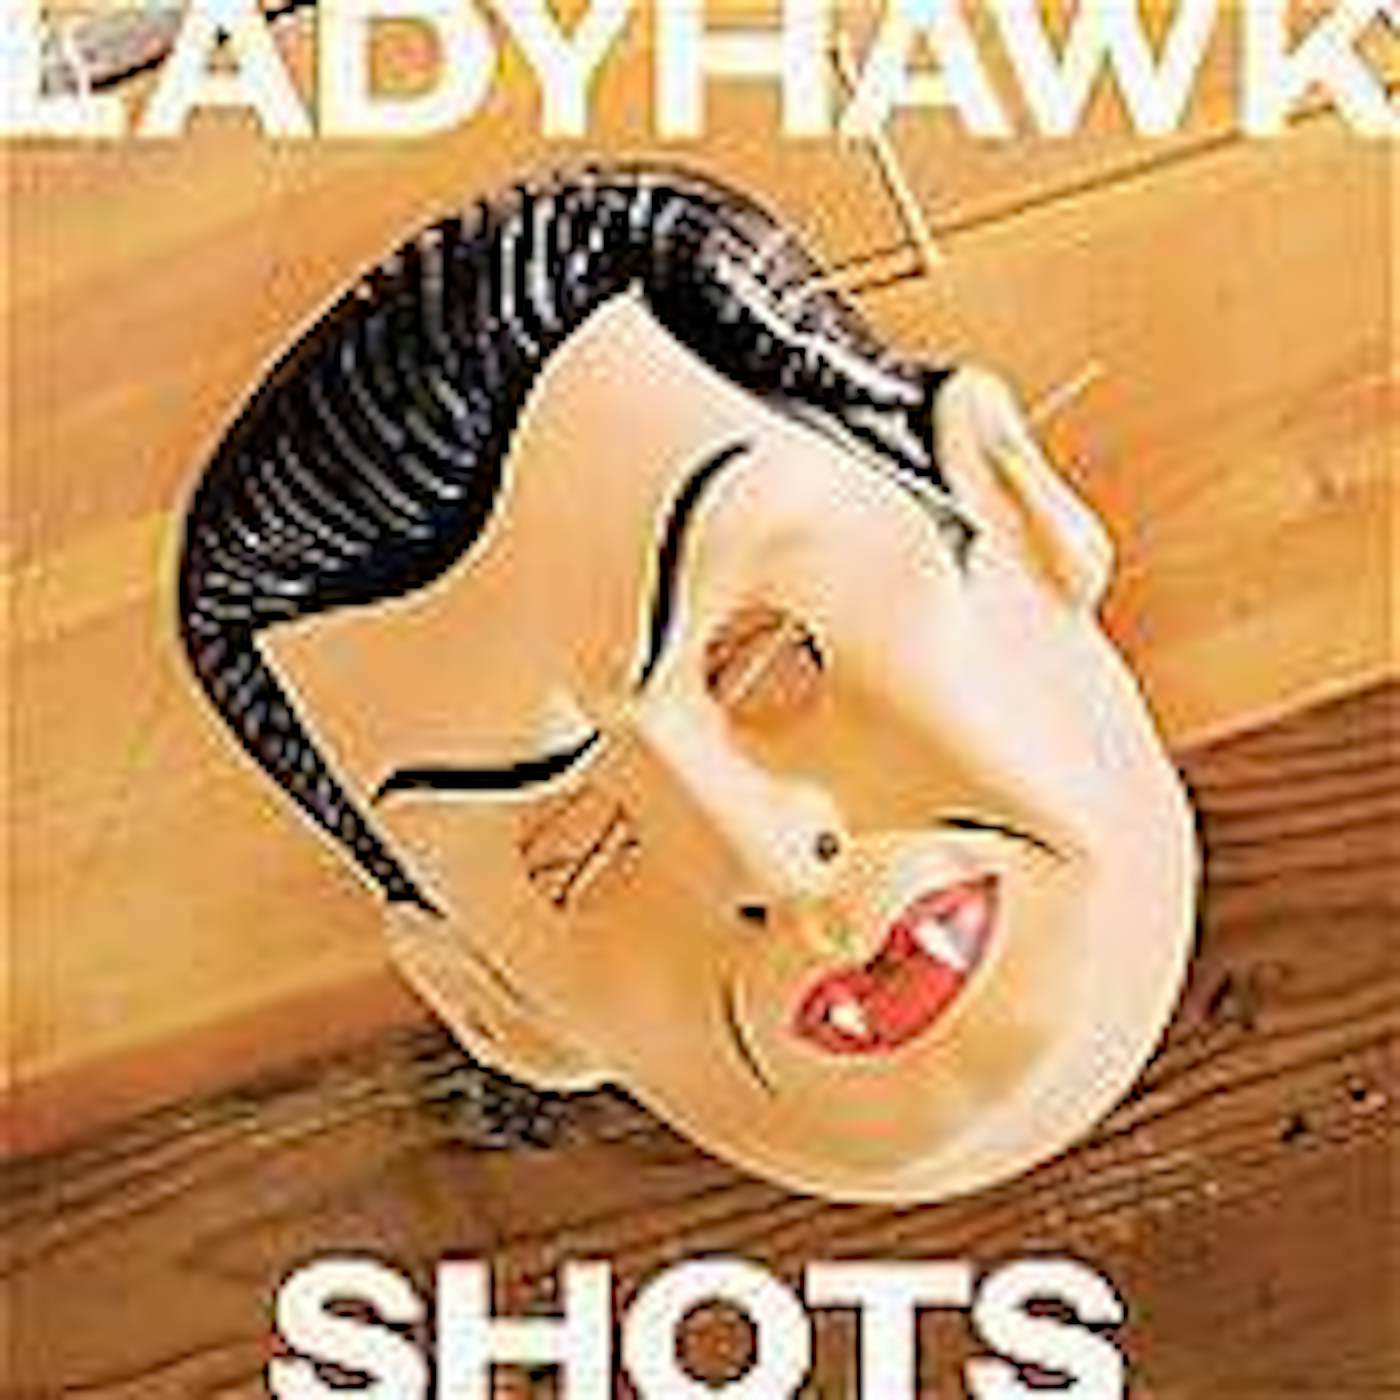 Ladyhawk SHOTS CD